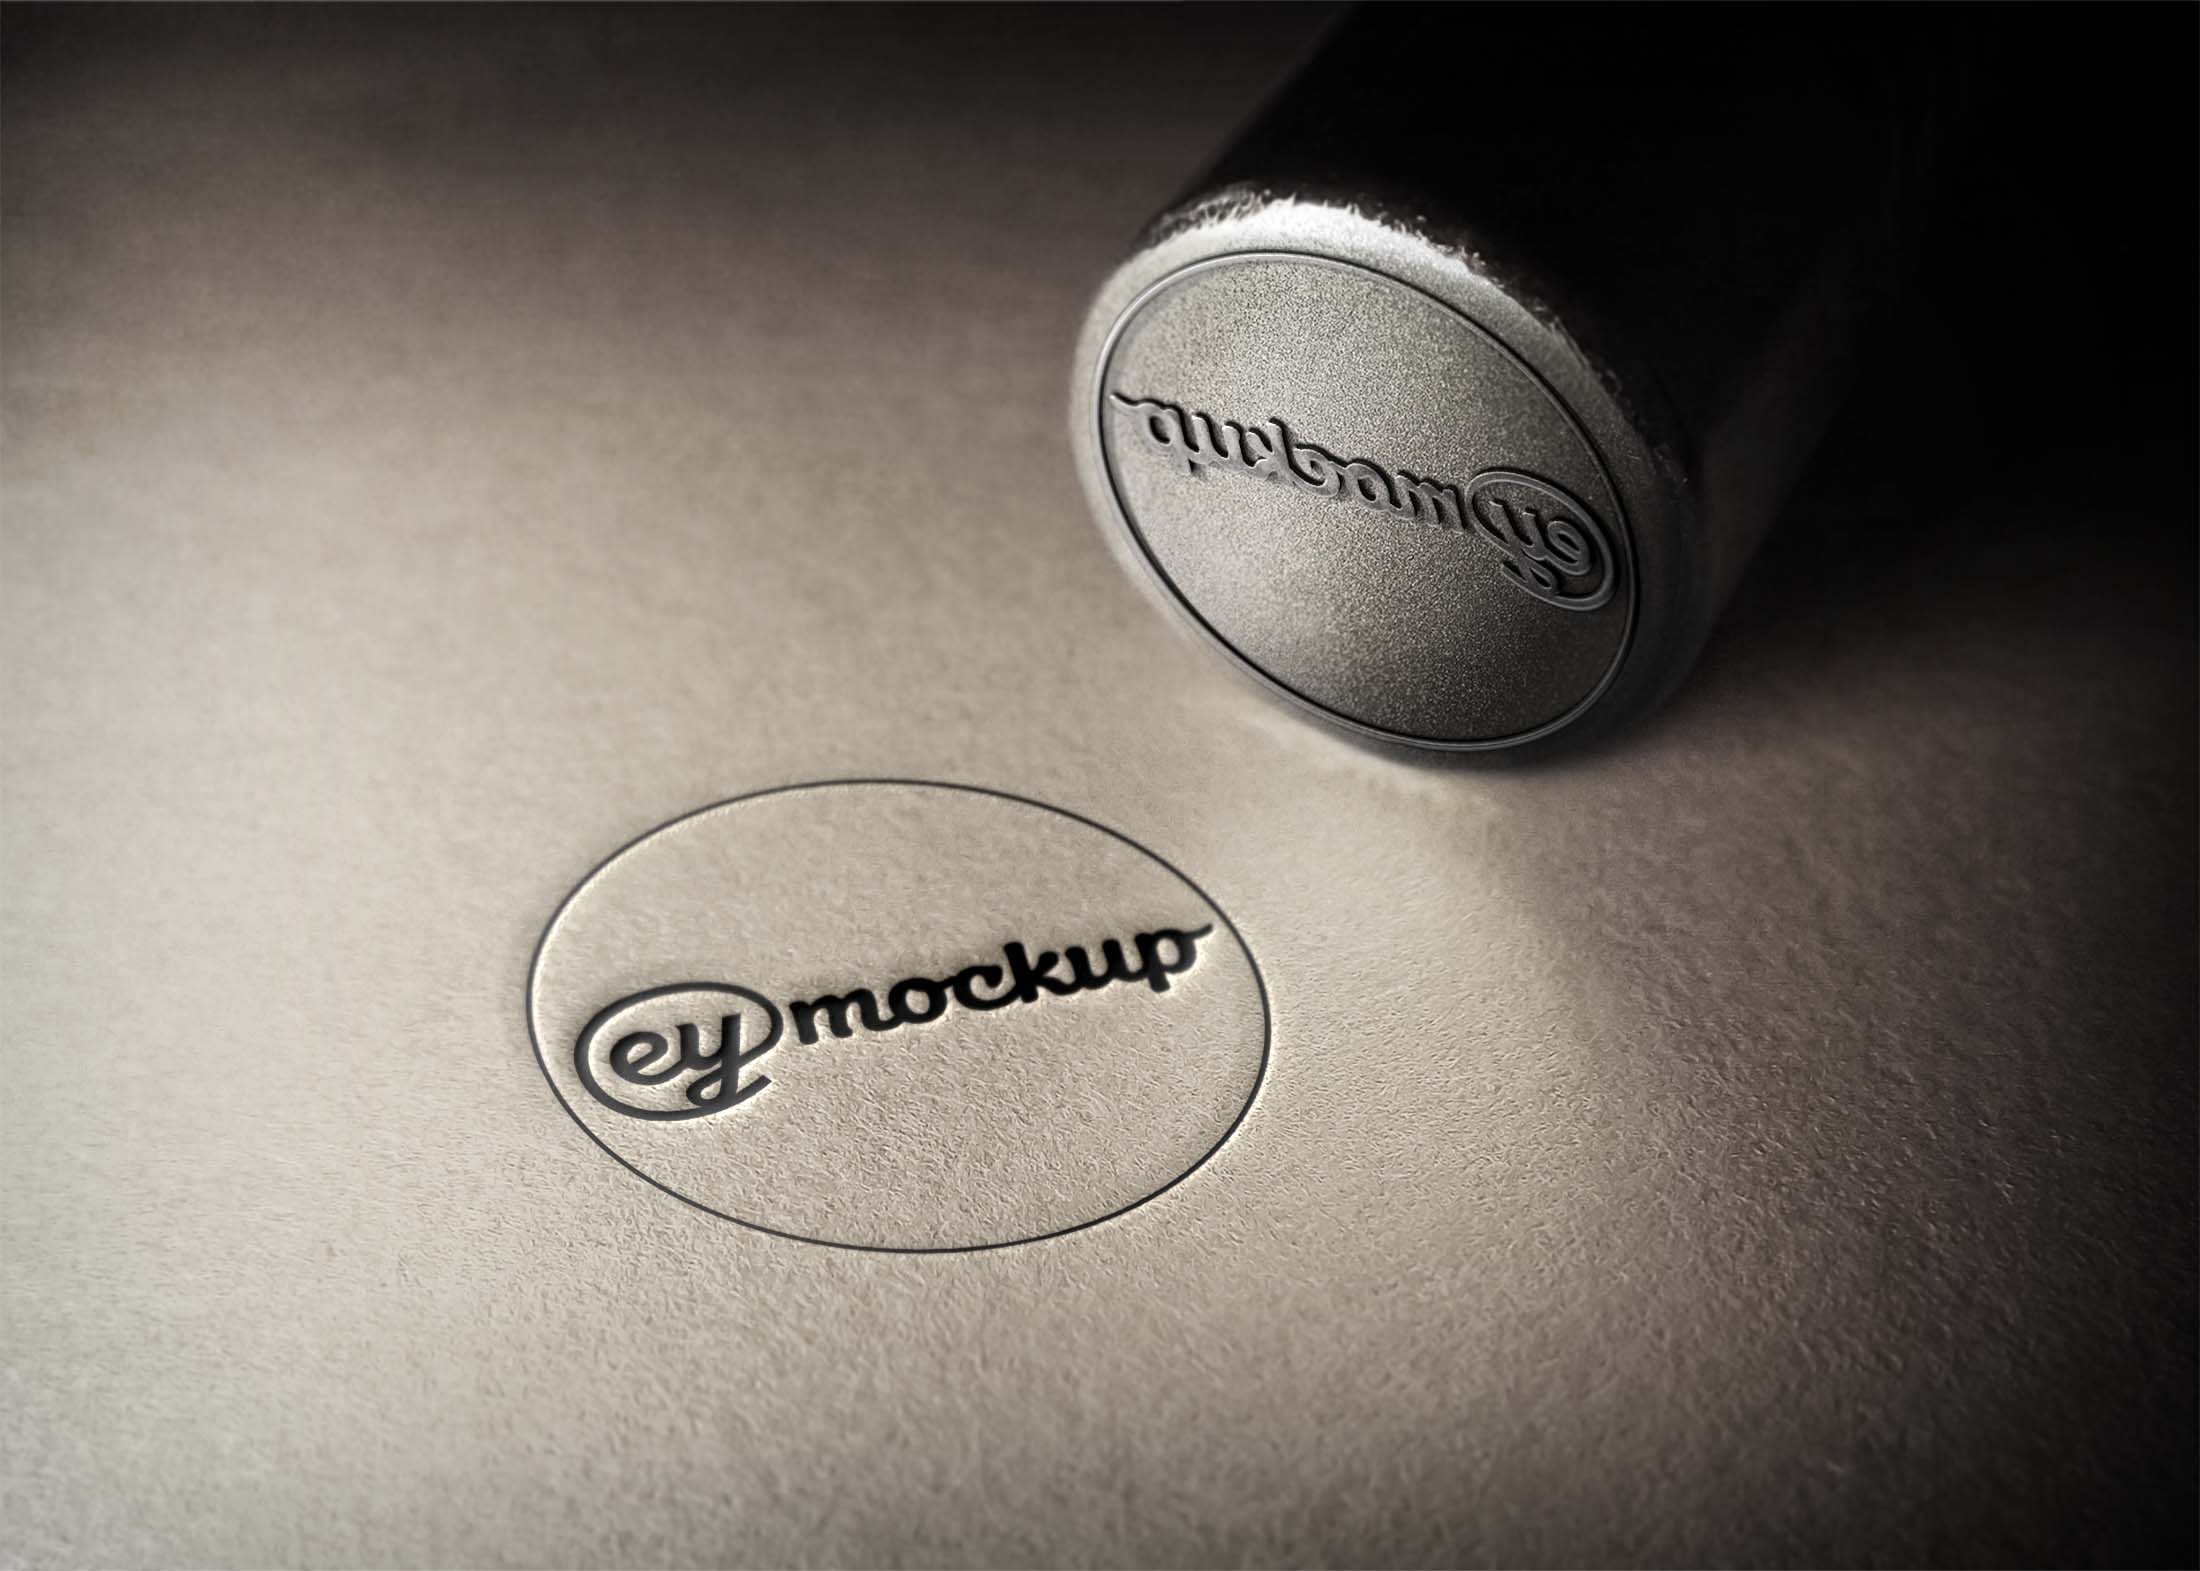 eymockup Round Stamp Logo Mockup